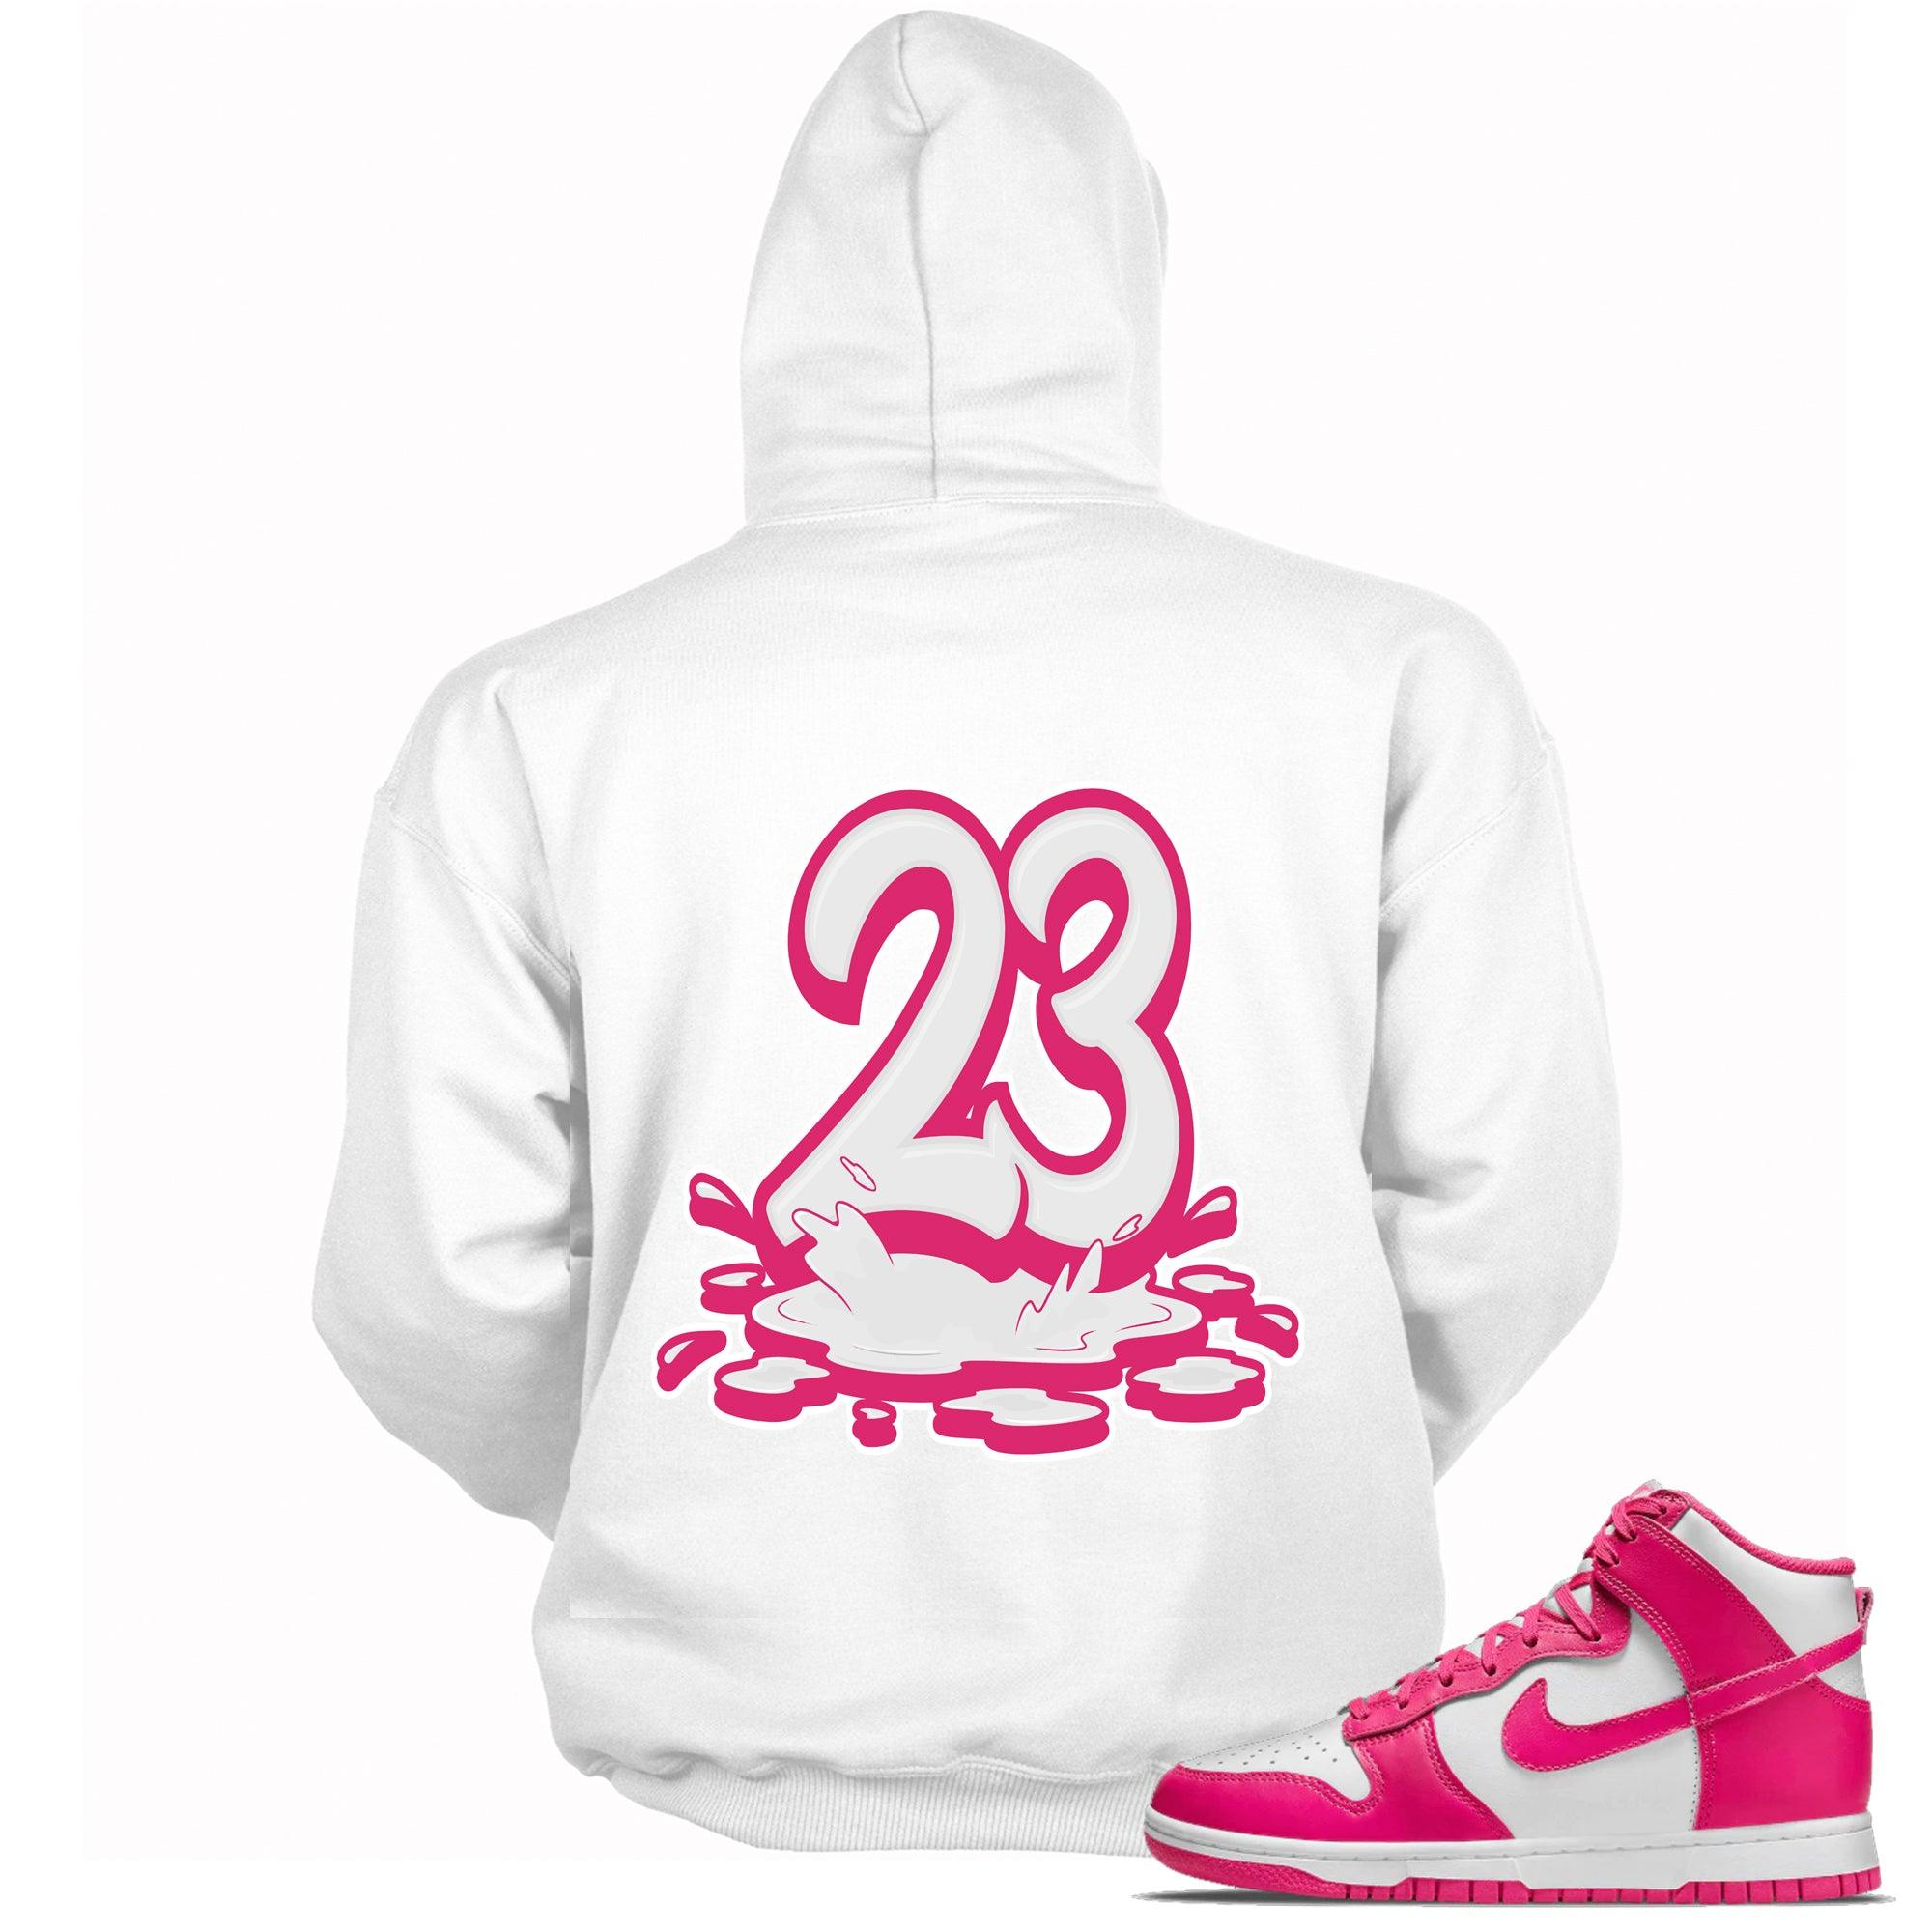 Number 23 Melting Hoodie Nike Dunk High Pink Prime photo